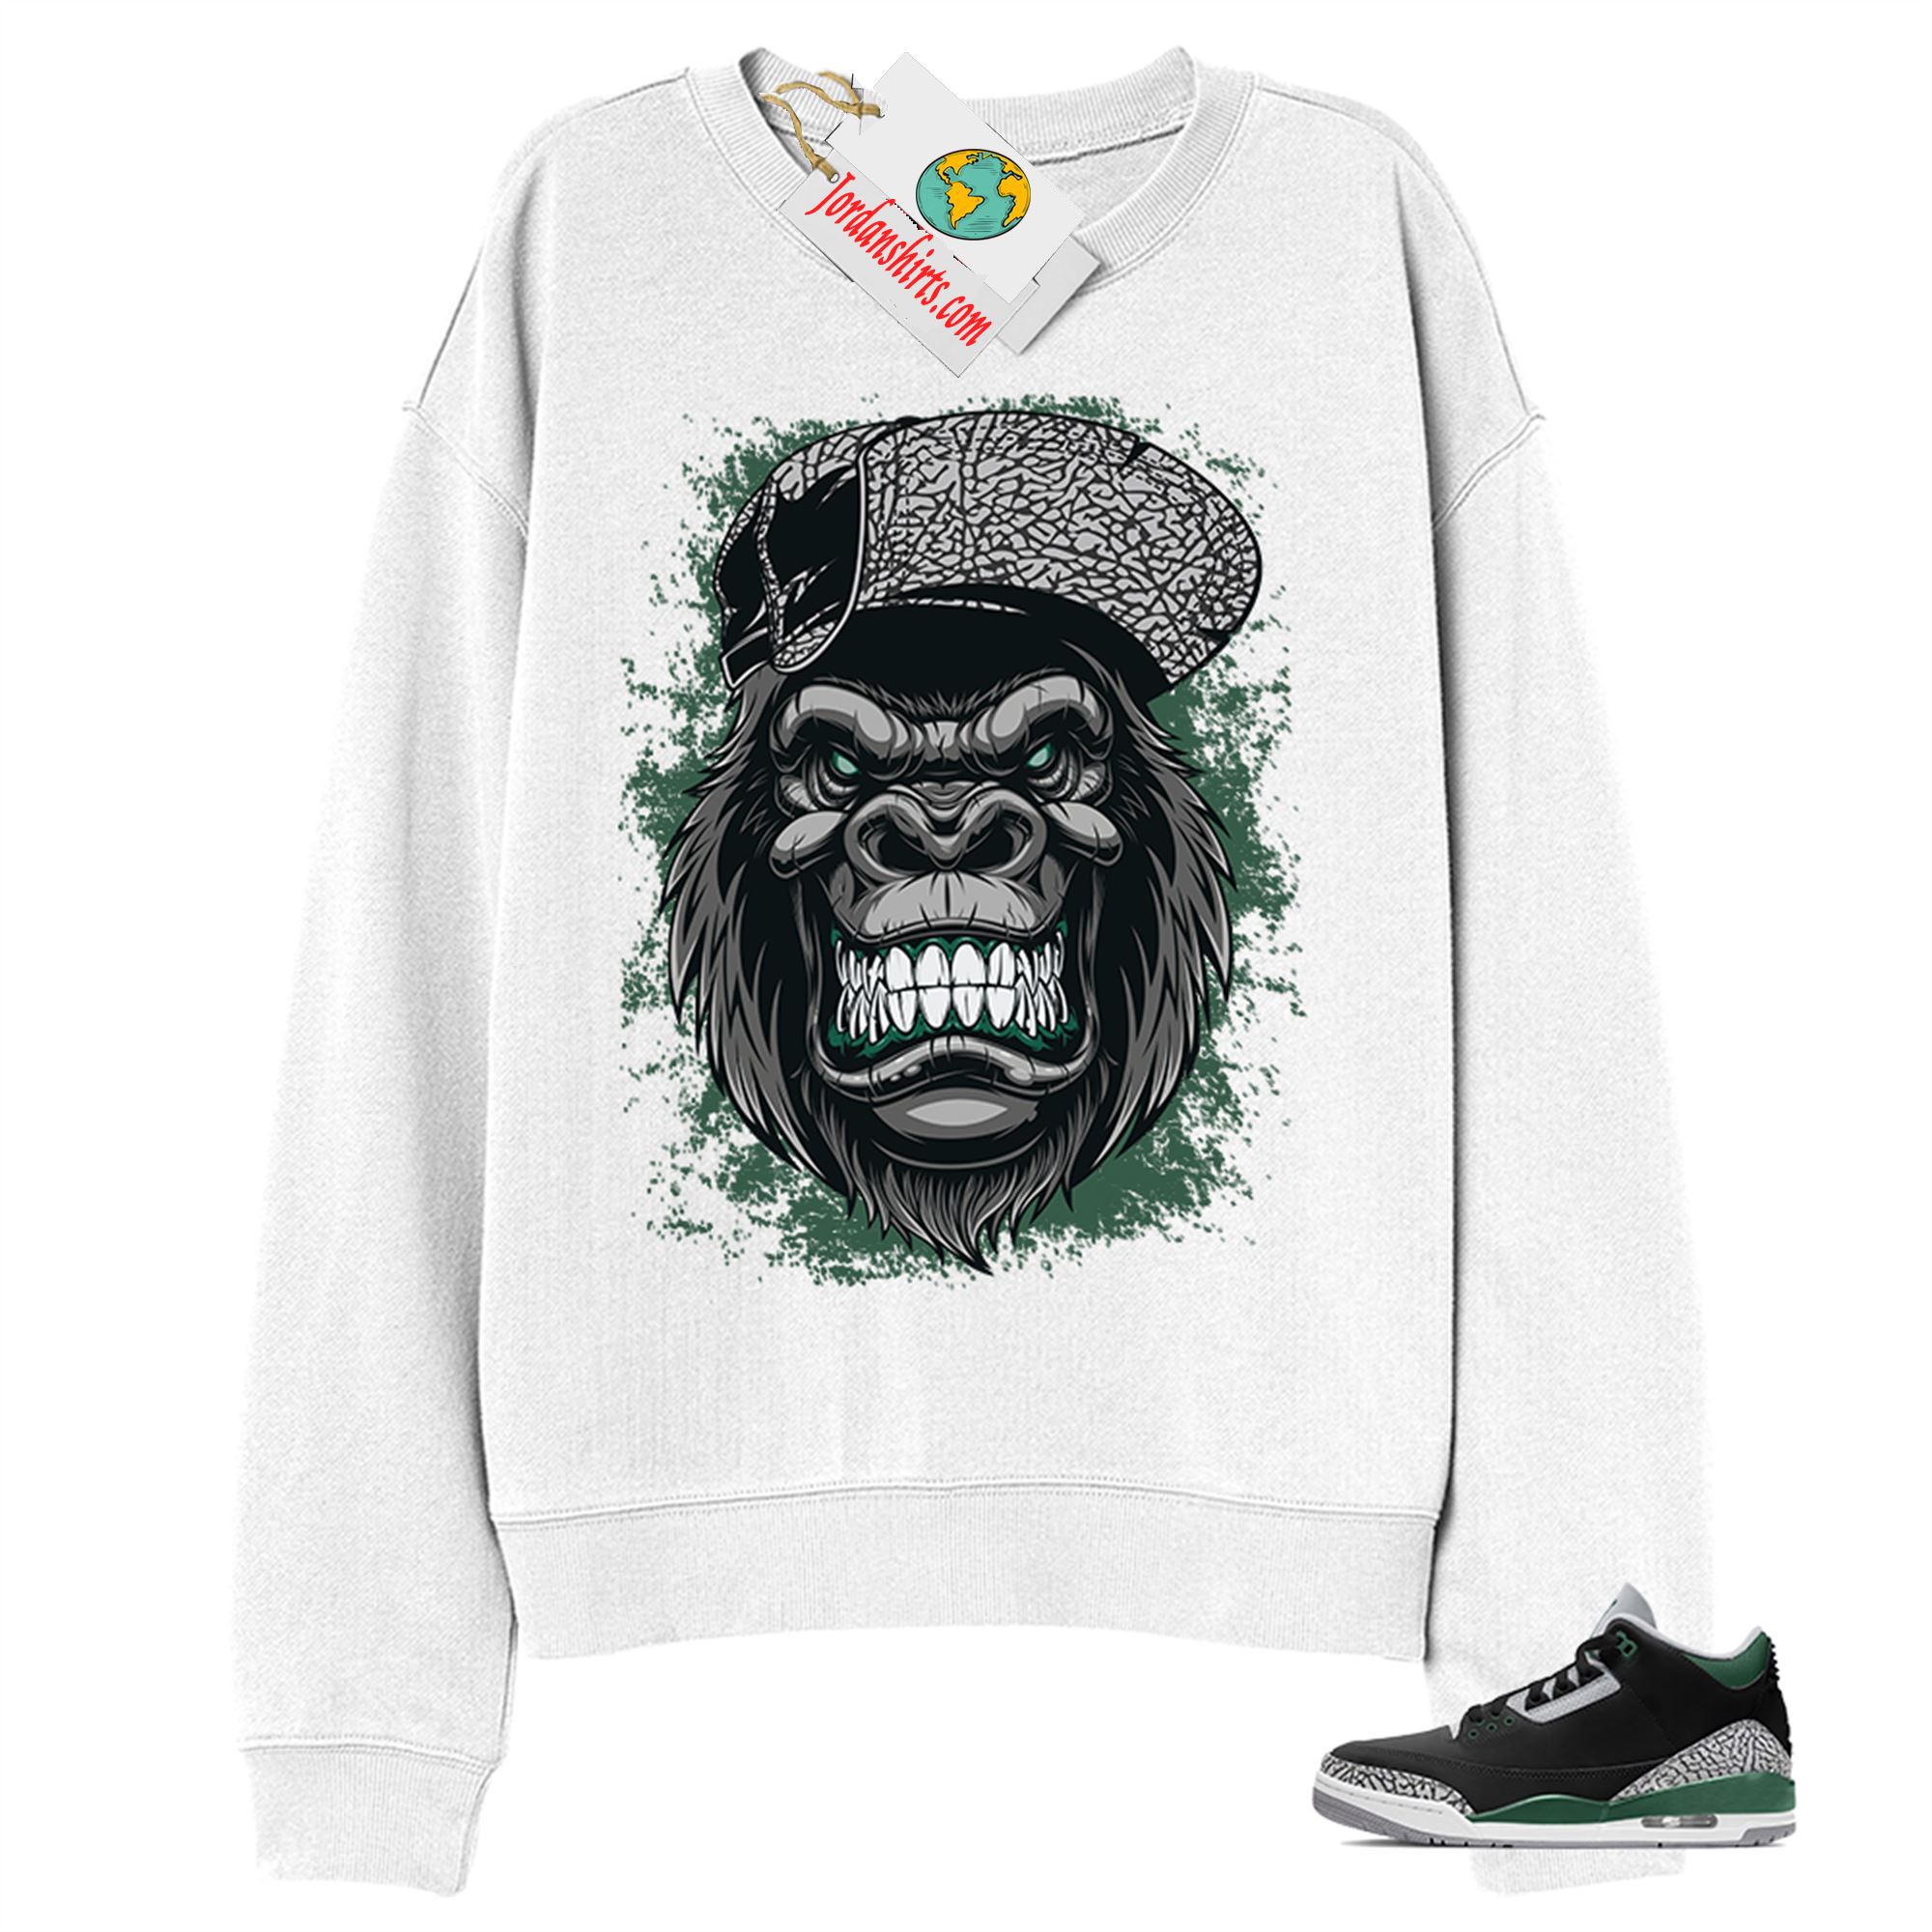 Jordan 3 Sweatshirt, Ferocious Gorilla White Sweatshirt Air Jordan 3 Pine Green 3s Full Size Up To 5xl